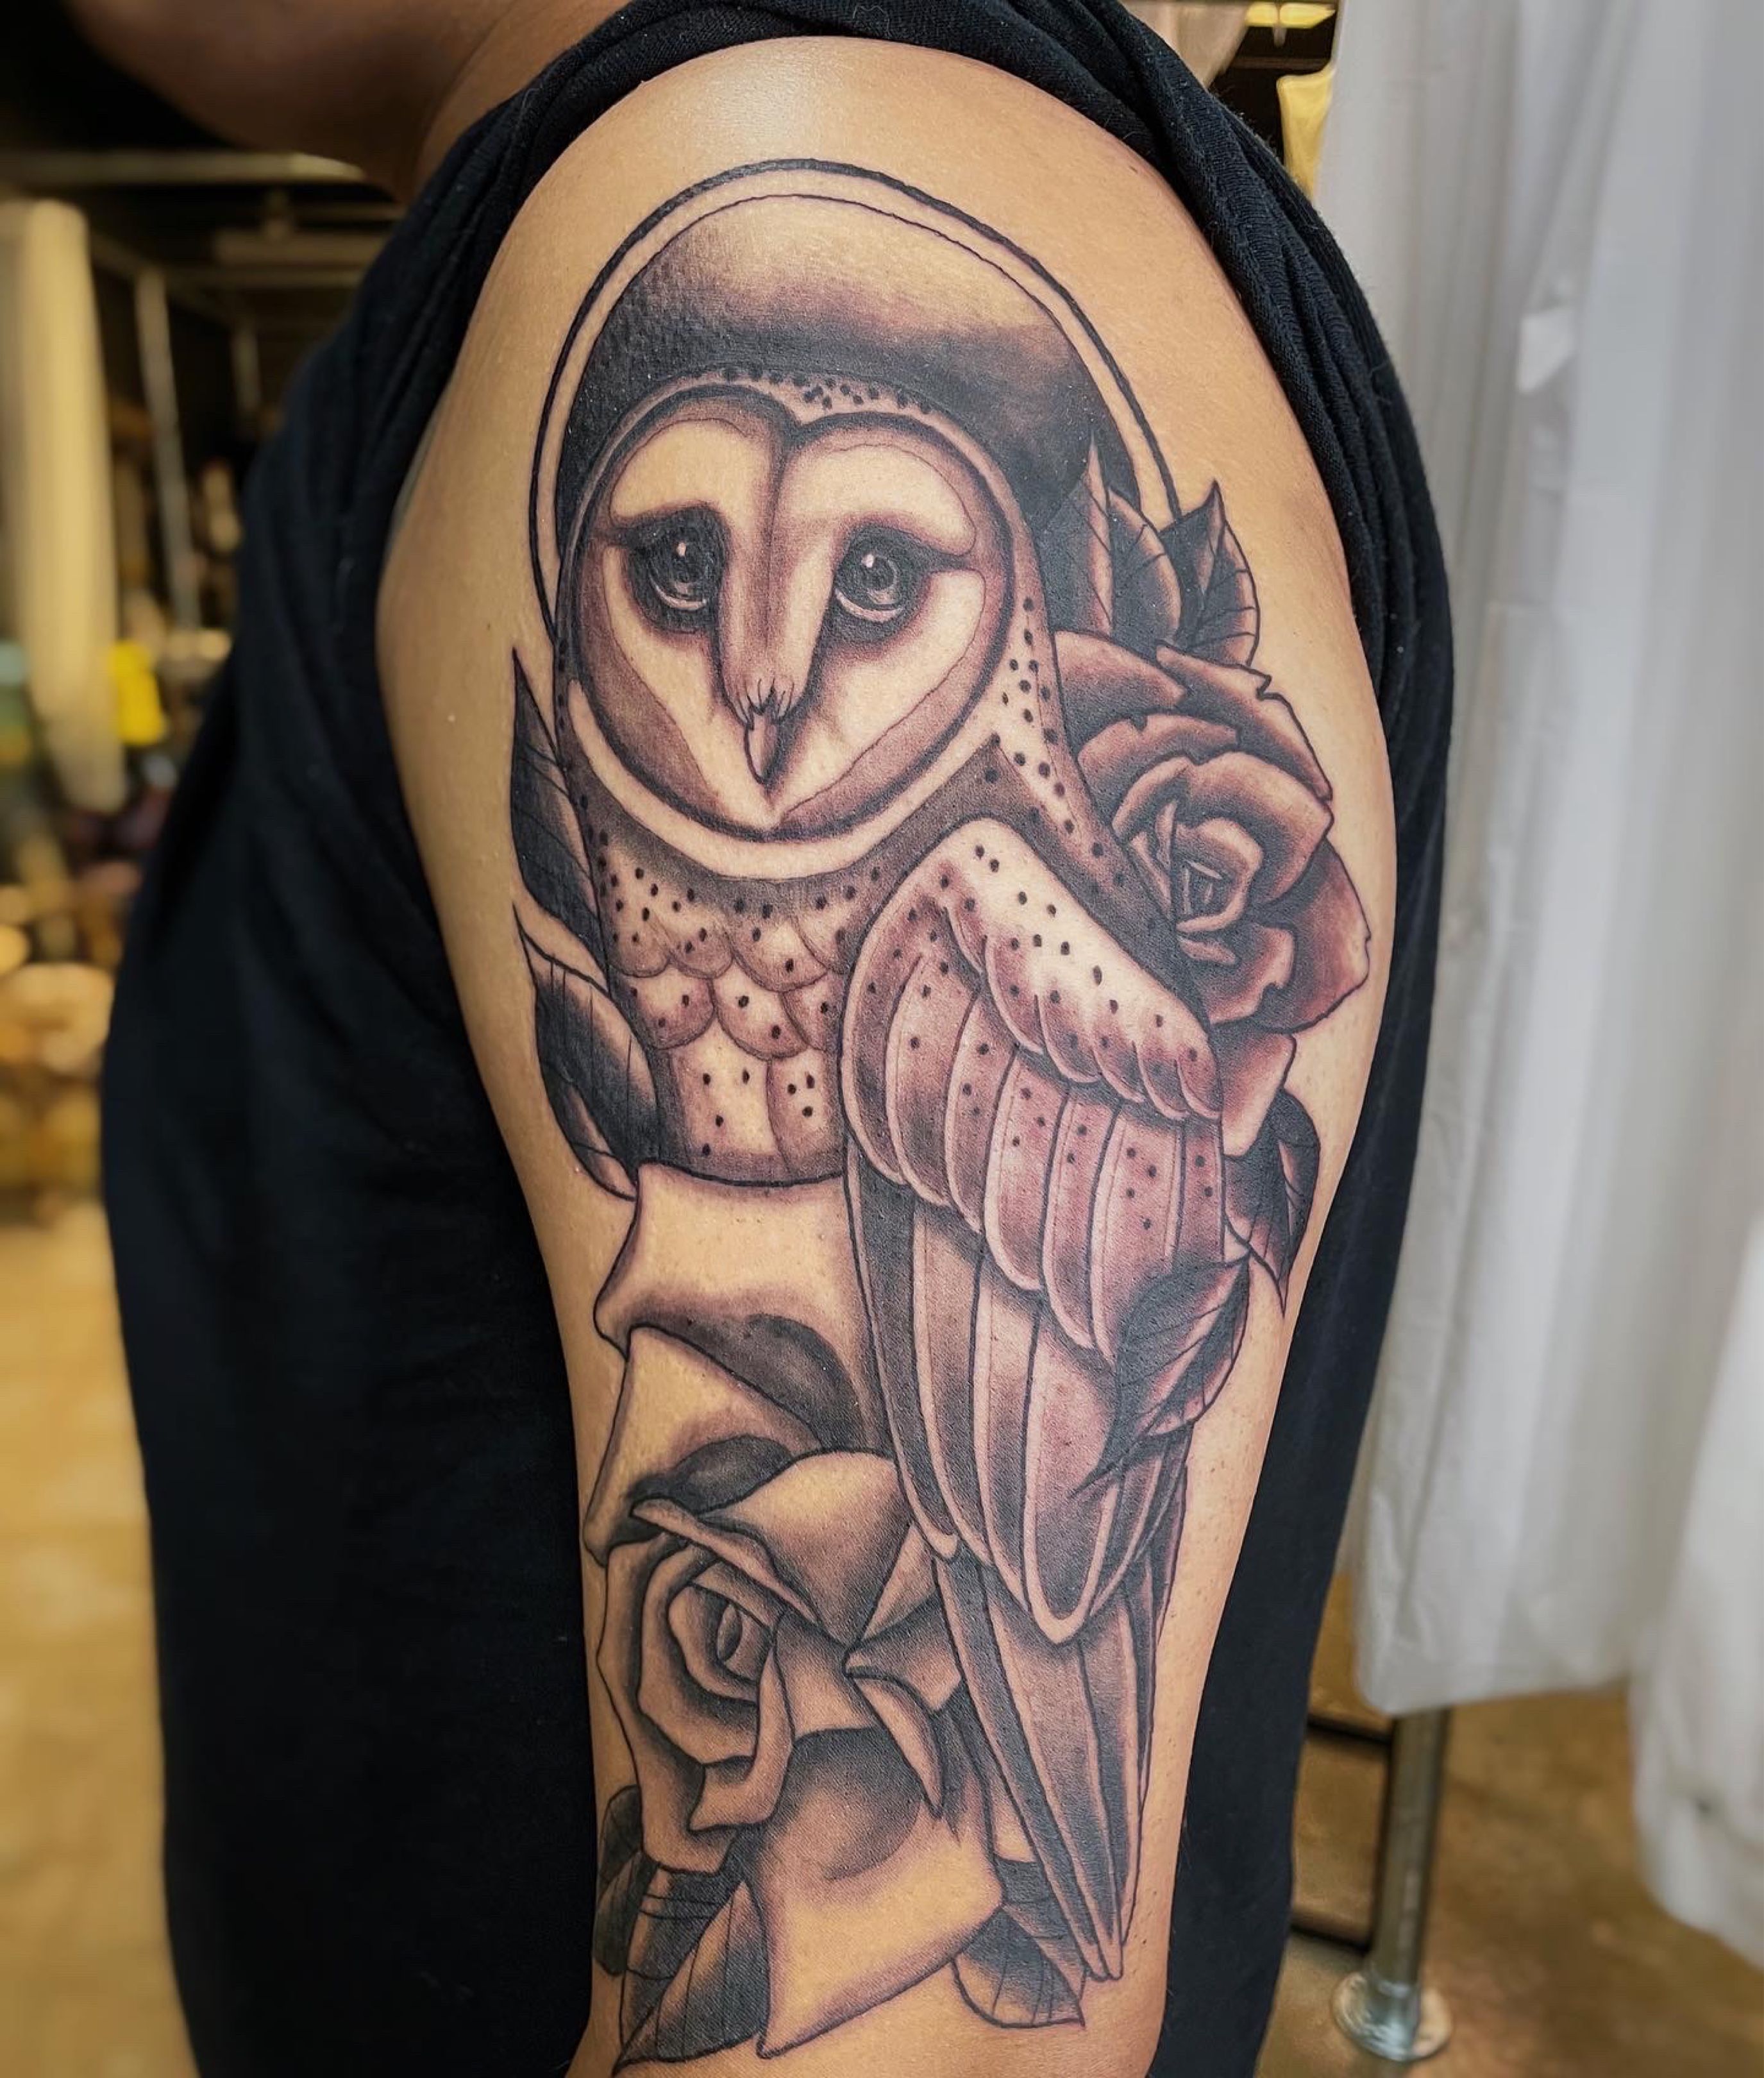 Barn owl done by Derik at Clean Slate Tattoo Denver CO  rtattoos